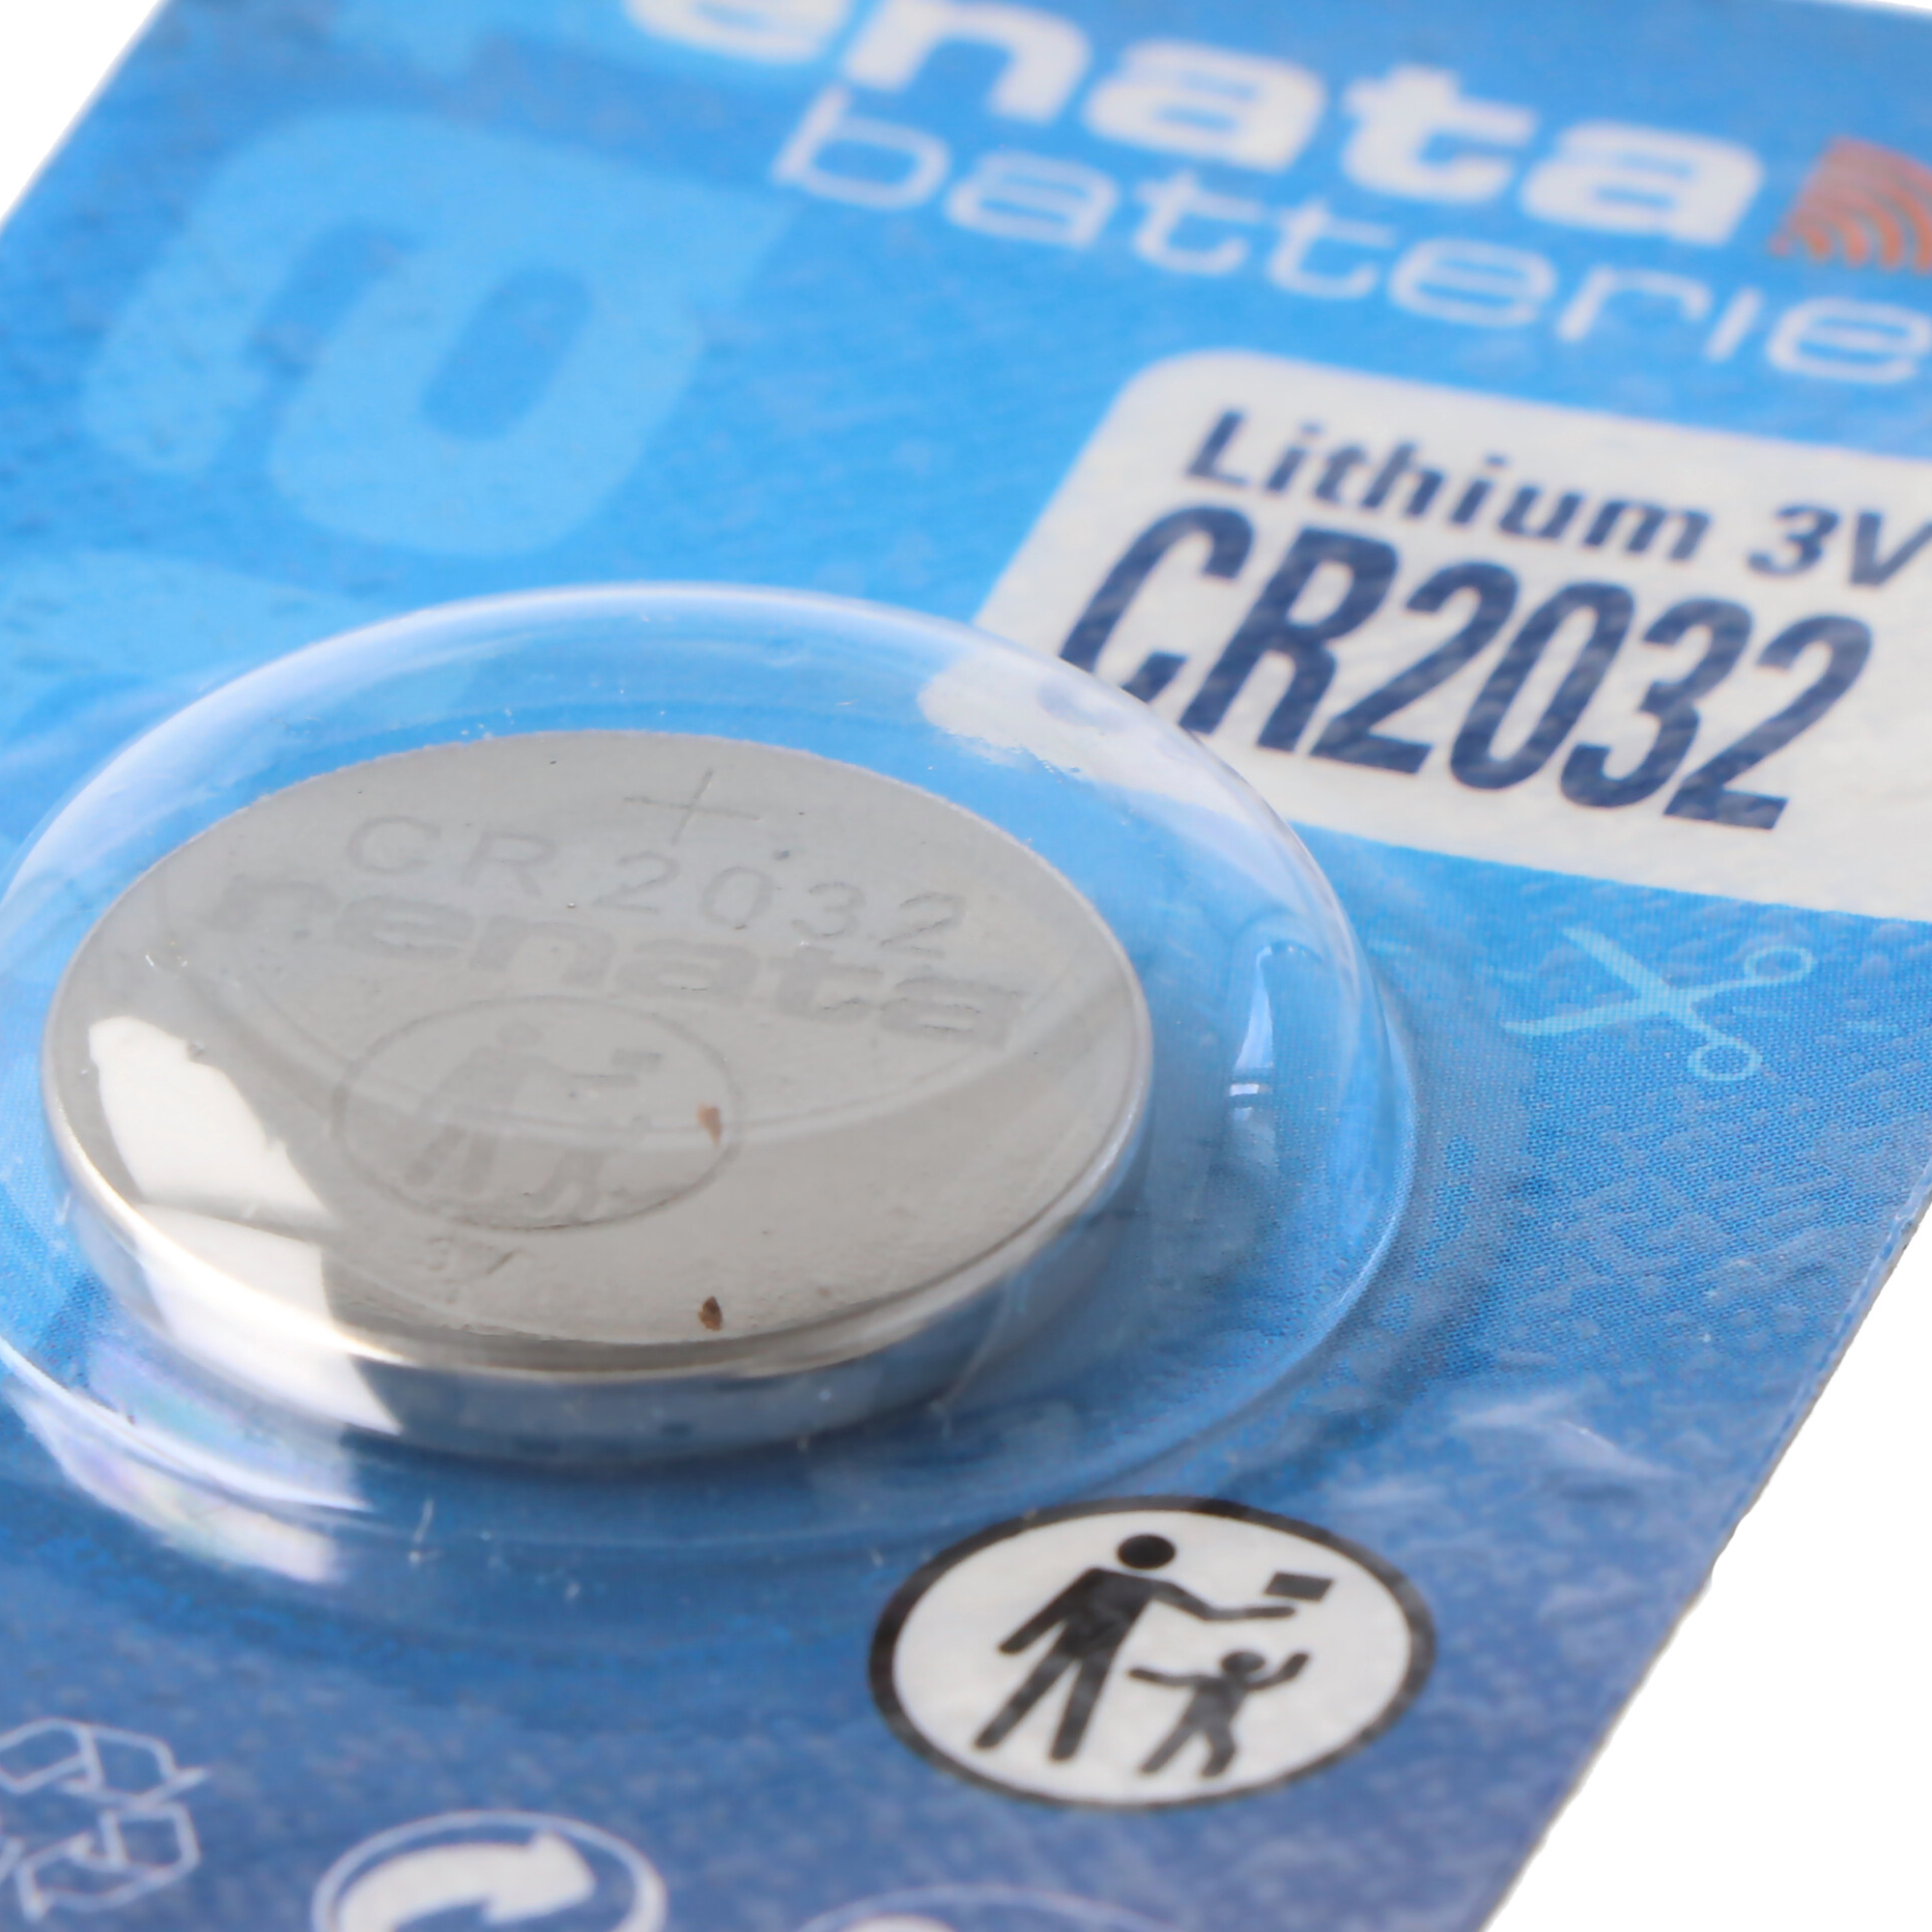 Renata CR2032 Lithium Batterie, Lithiumzelle CR2032, 3V